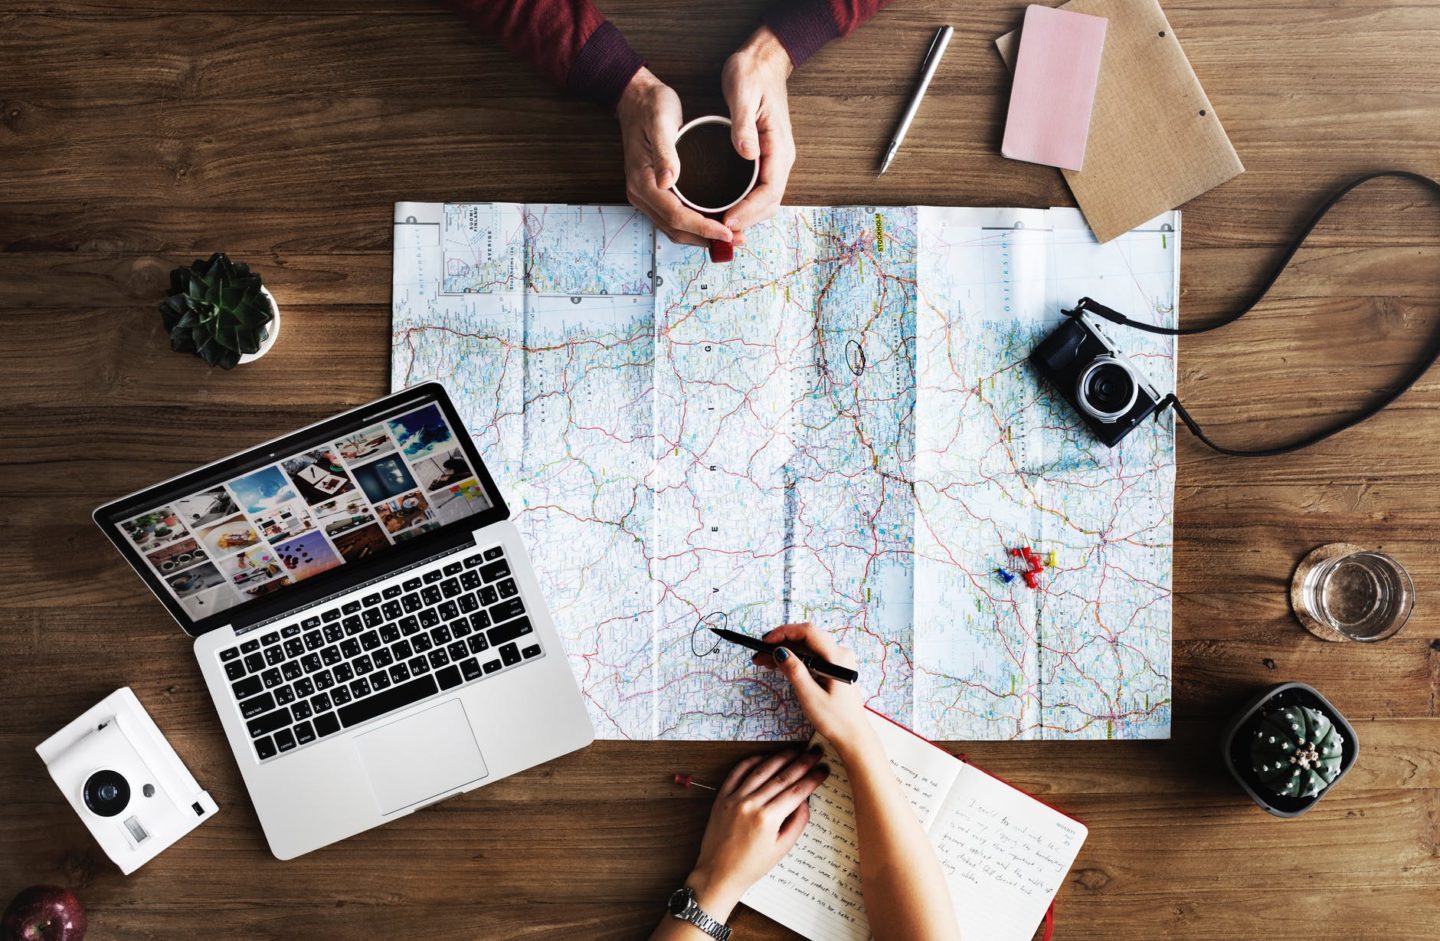 14 Travel websites to help plan your next trip